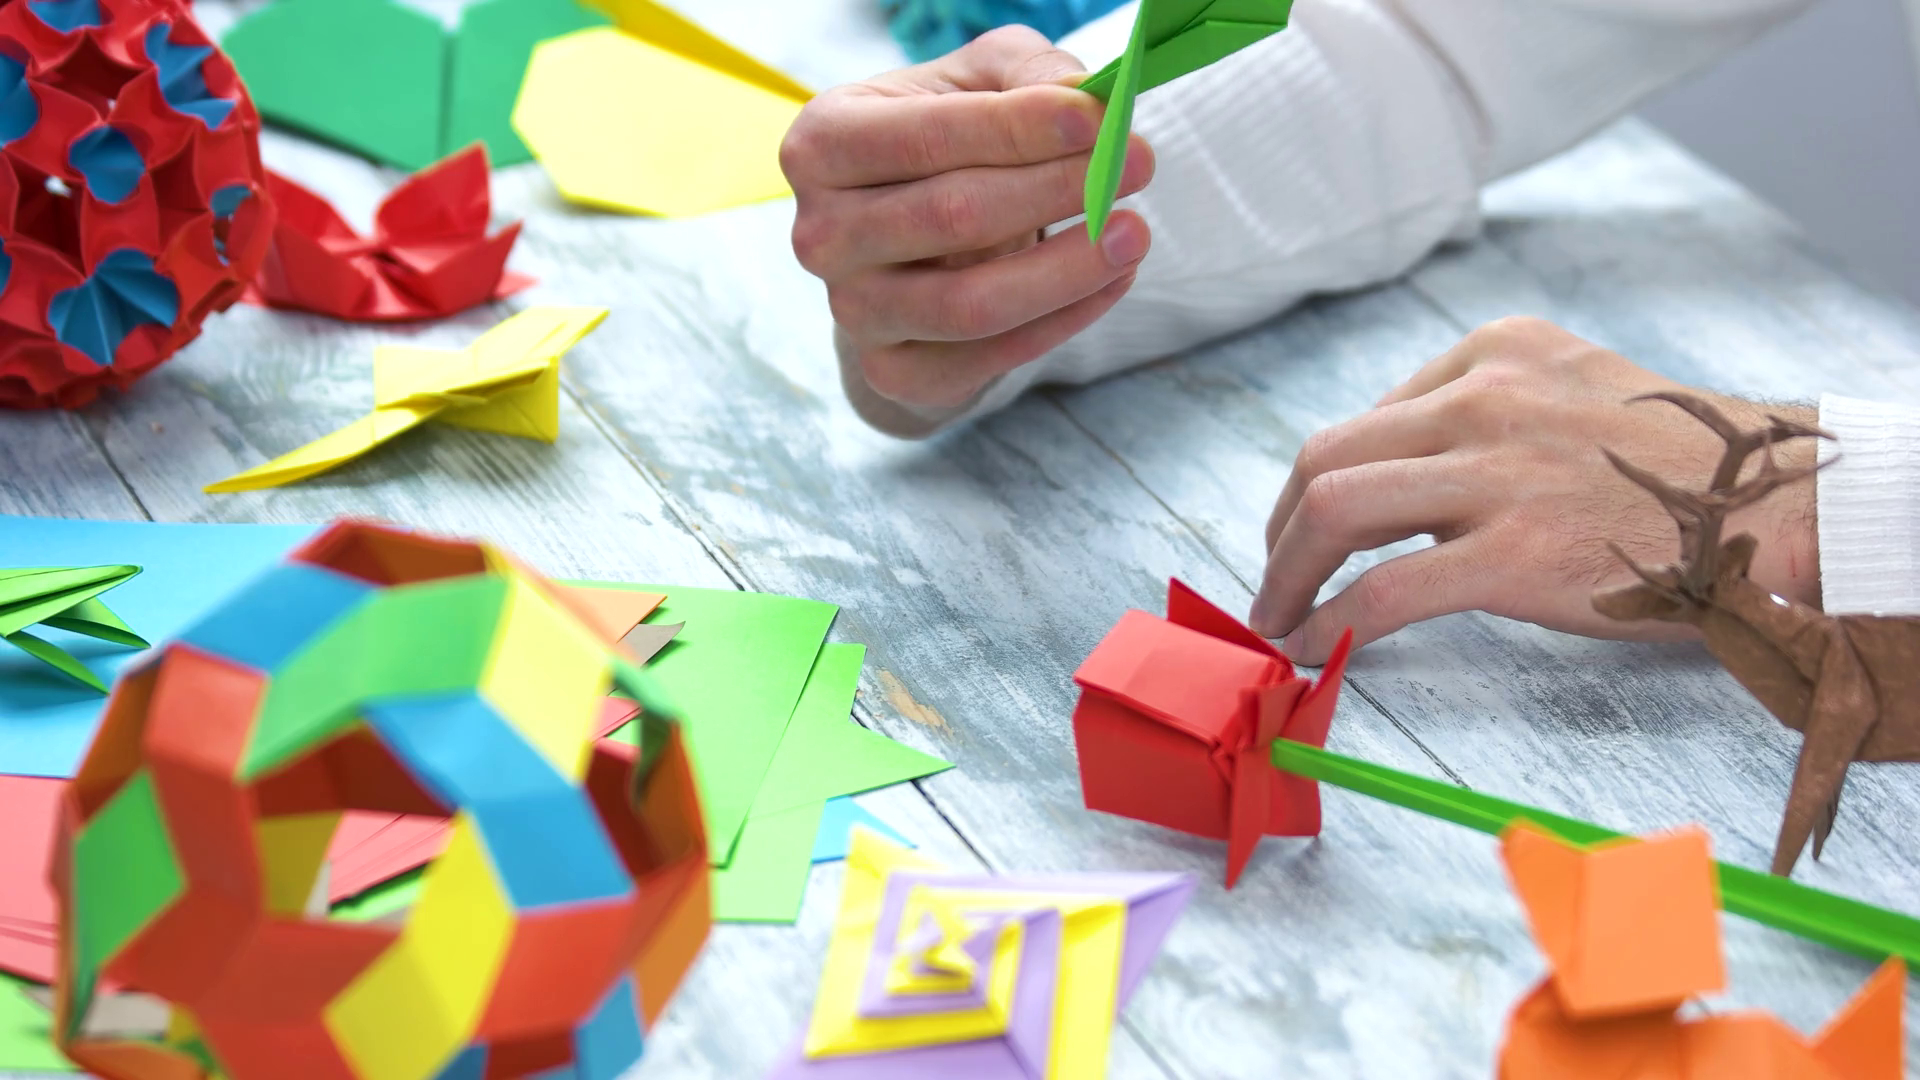 Crane Origami Video Making Paper Crane At Workshop Origami Lessons Paper Folding Art Beautiful Hob And Fun Activity